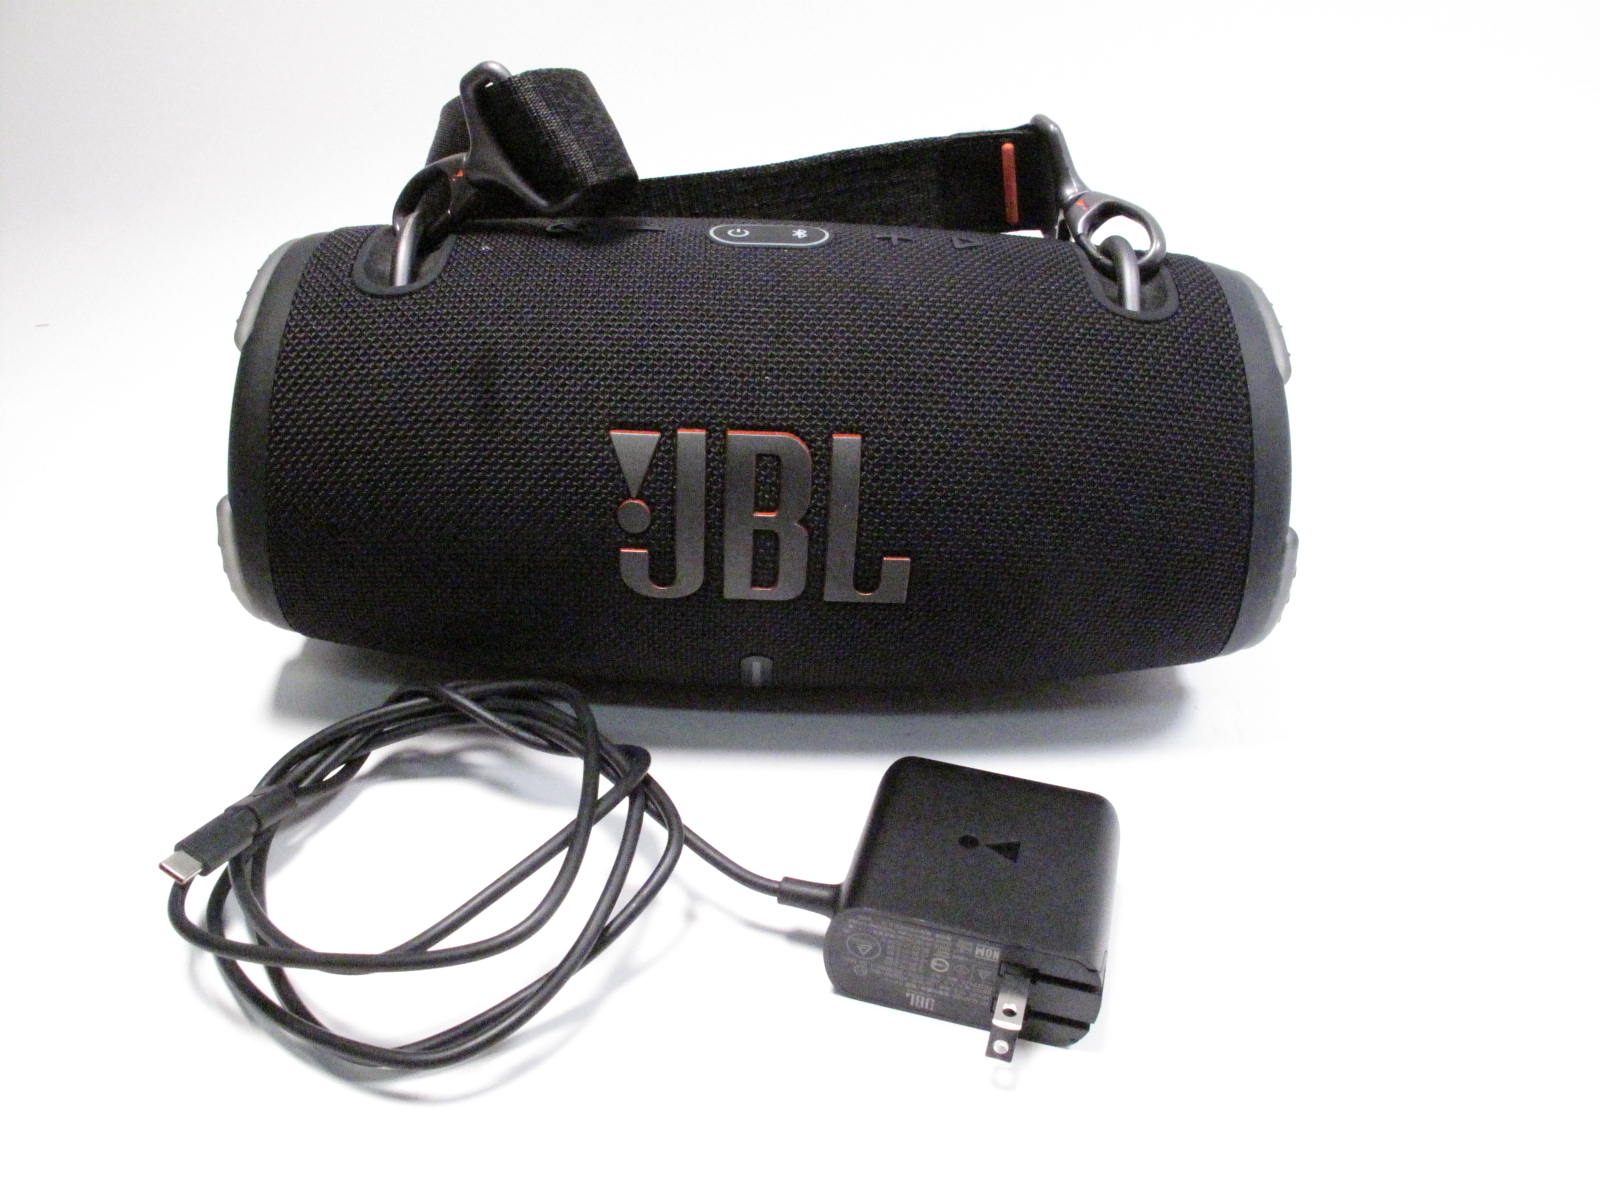 JBL Xtreme 3 Portable Bluetooth Speaker System - Black